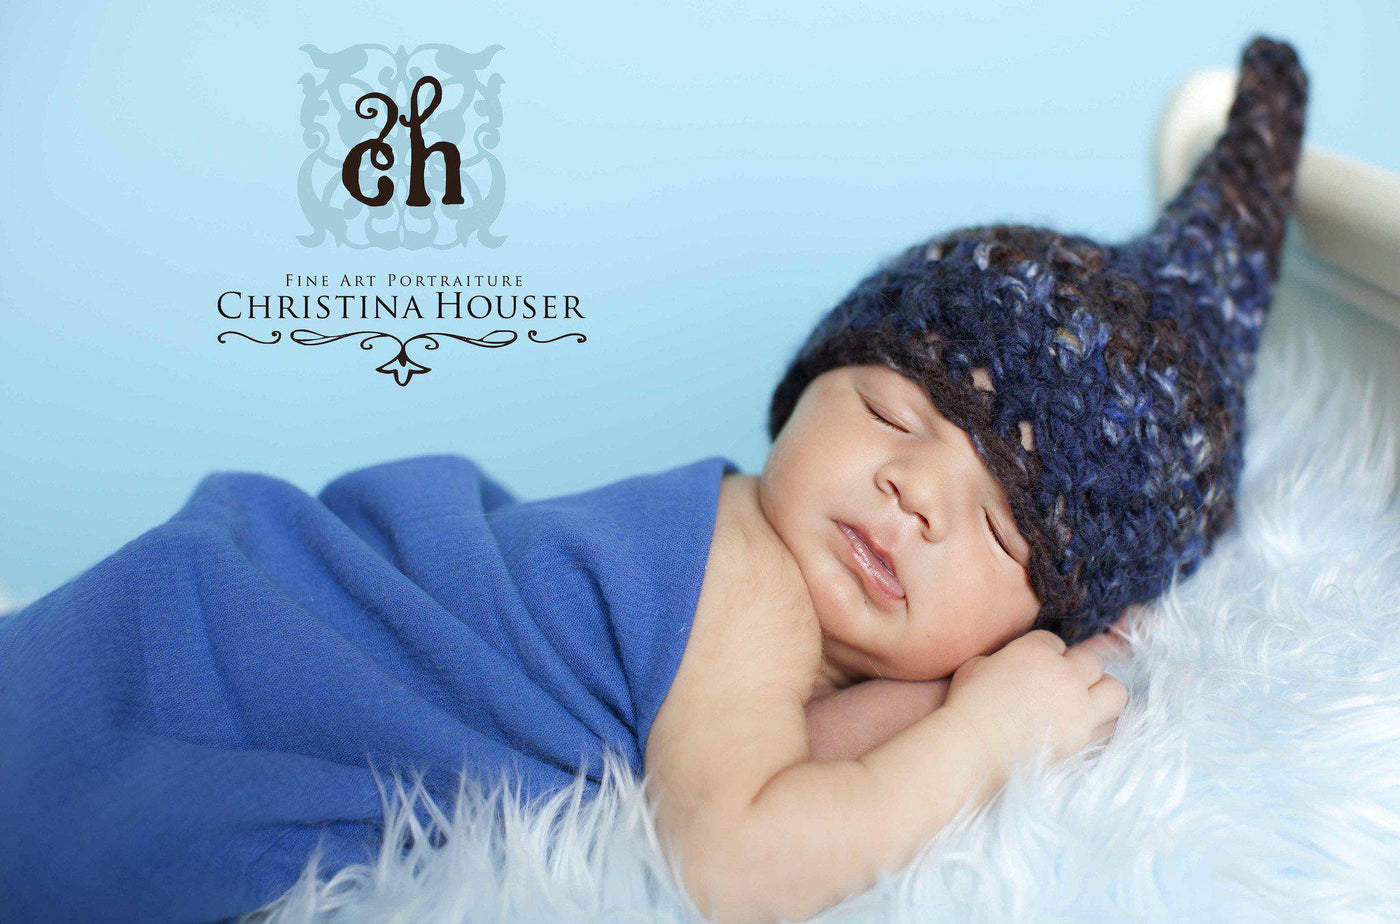 Blue Jean Newborn Gnome Hat - Beautiful Photo Props